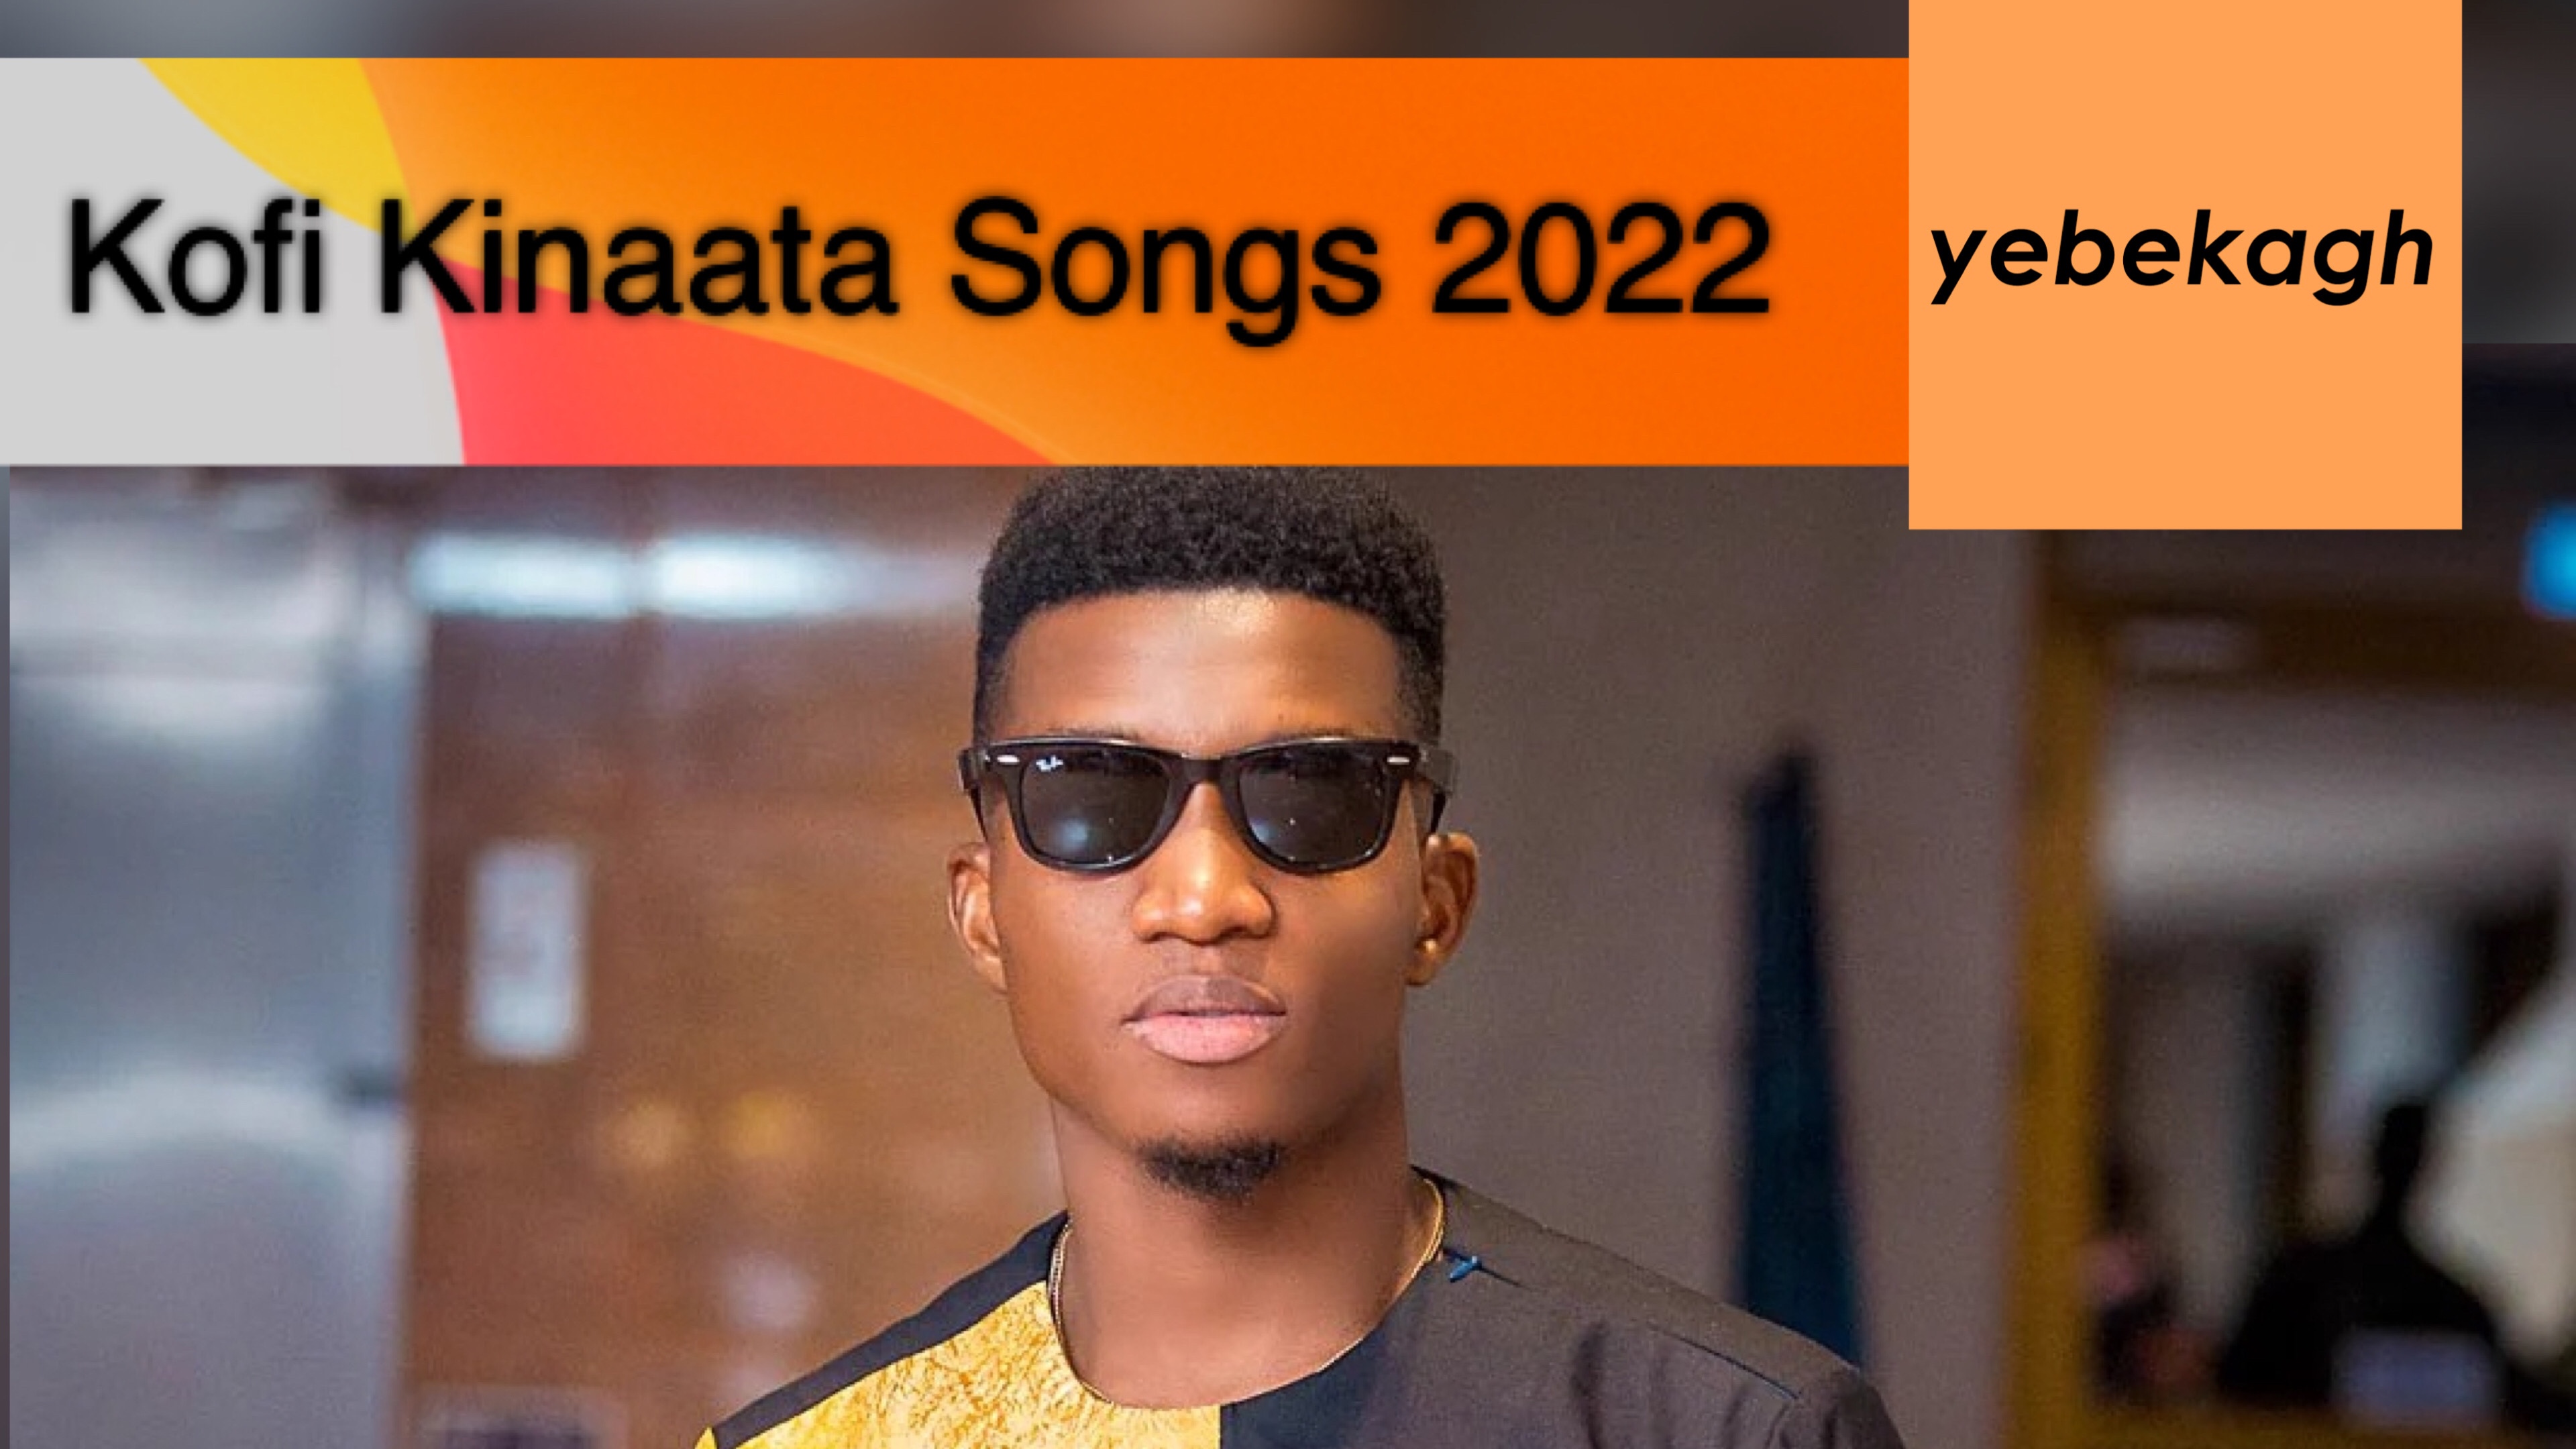 Full List of Kofi Kinaata Songs in 2022